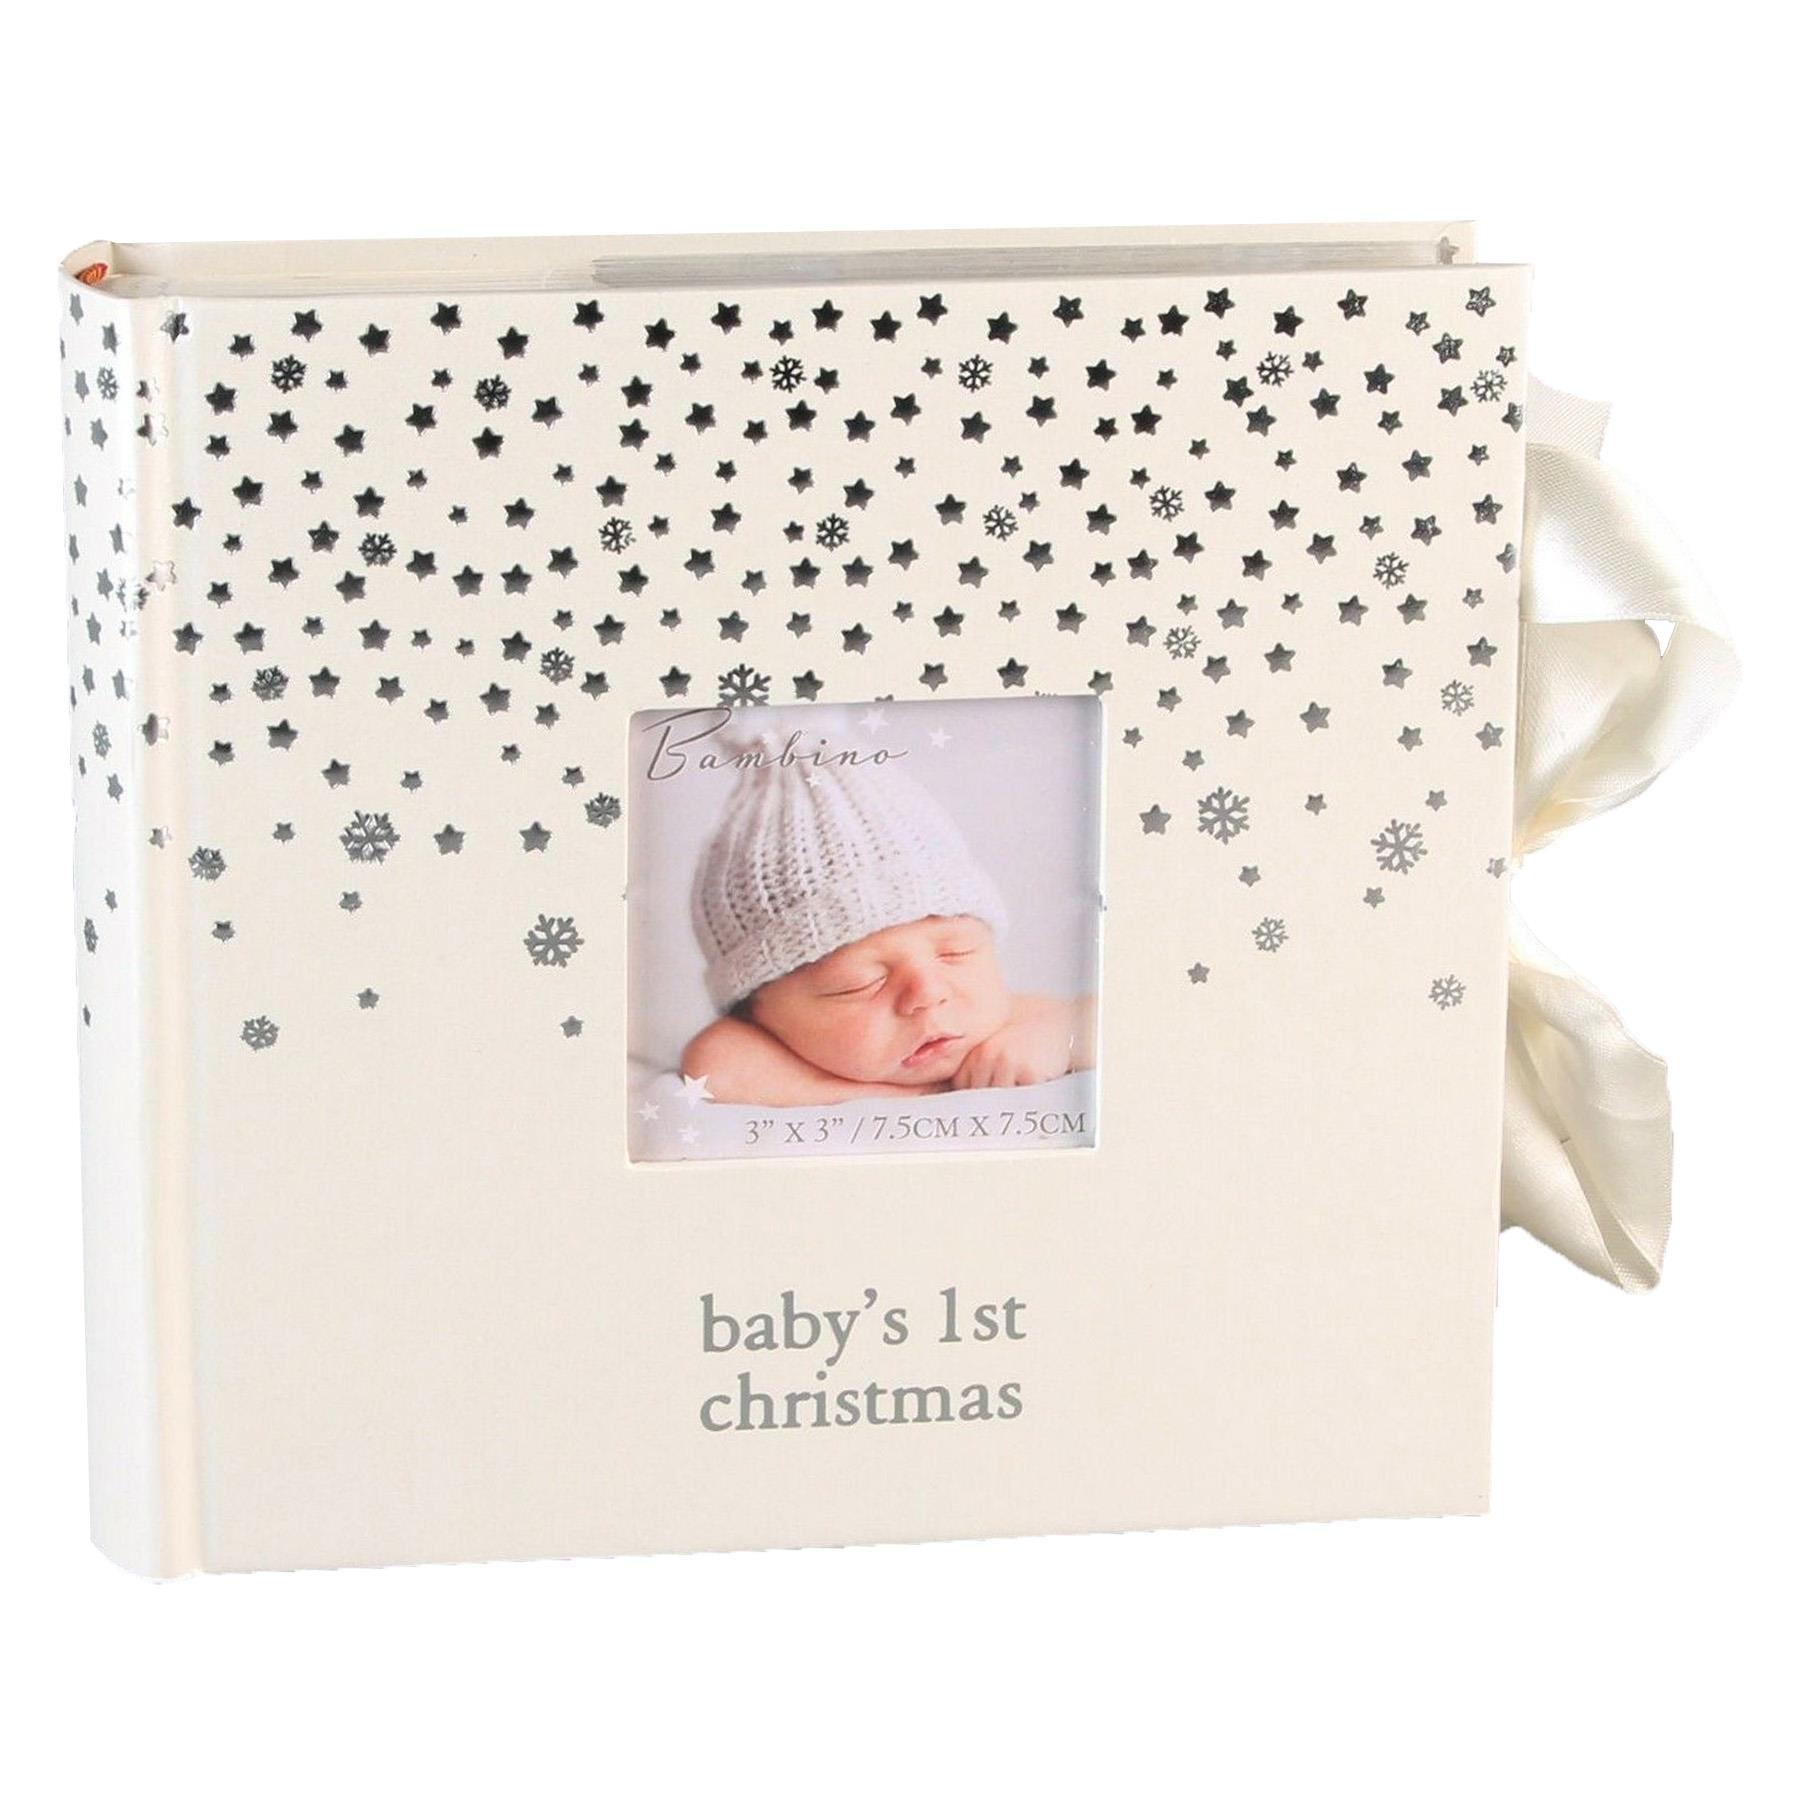 Unisex Baby's 1st Christmas Photo Album - Holds 80 6x4